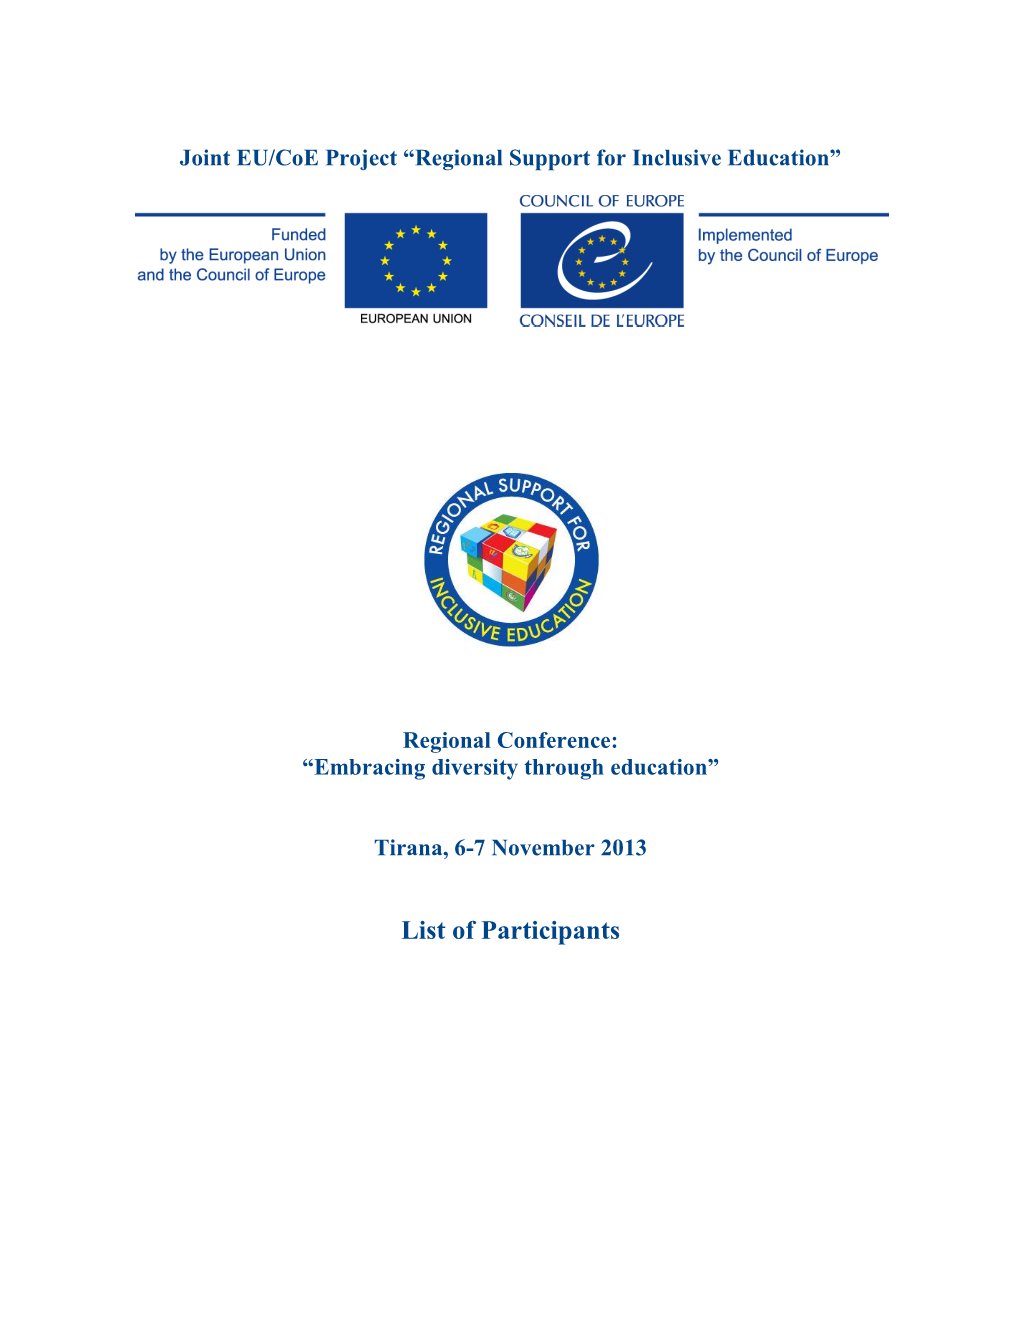 List of Participants List of Participants of Regional Conference: “Embracing Diversity Through Education” Tirana, Albania, 6-7 November 2013